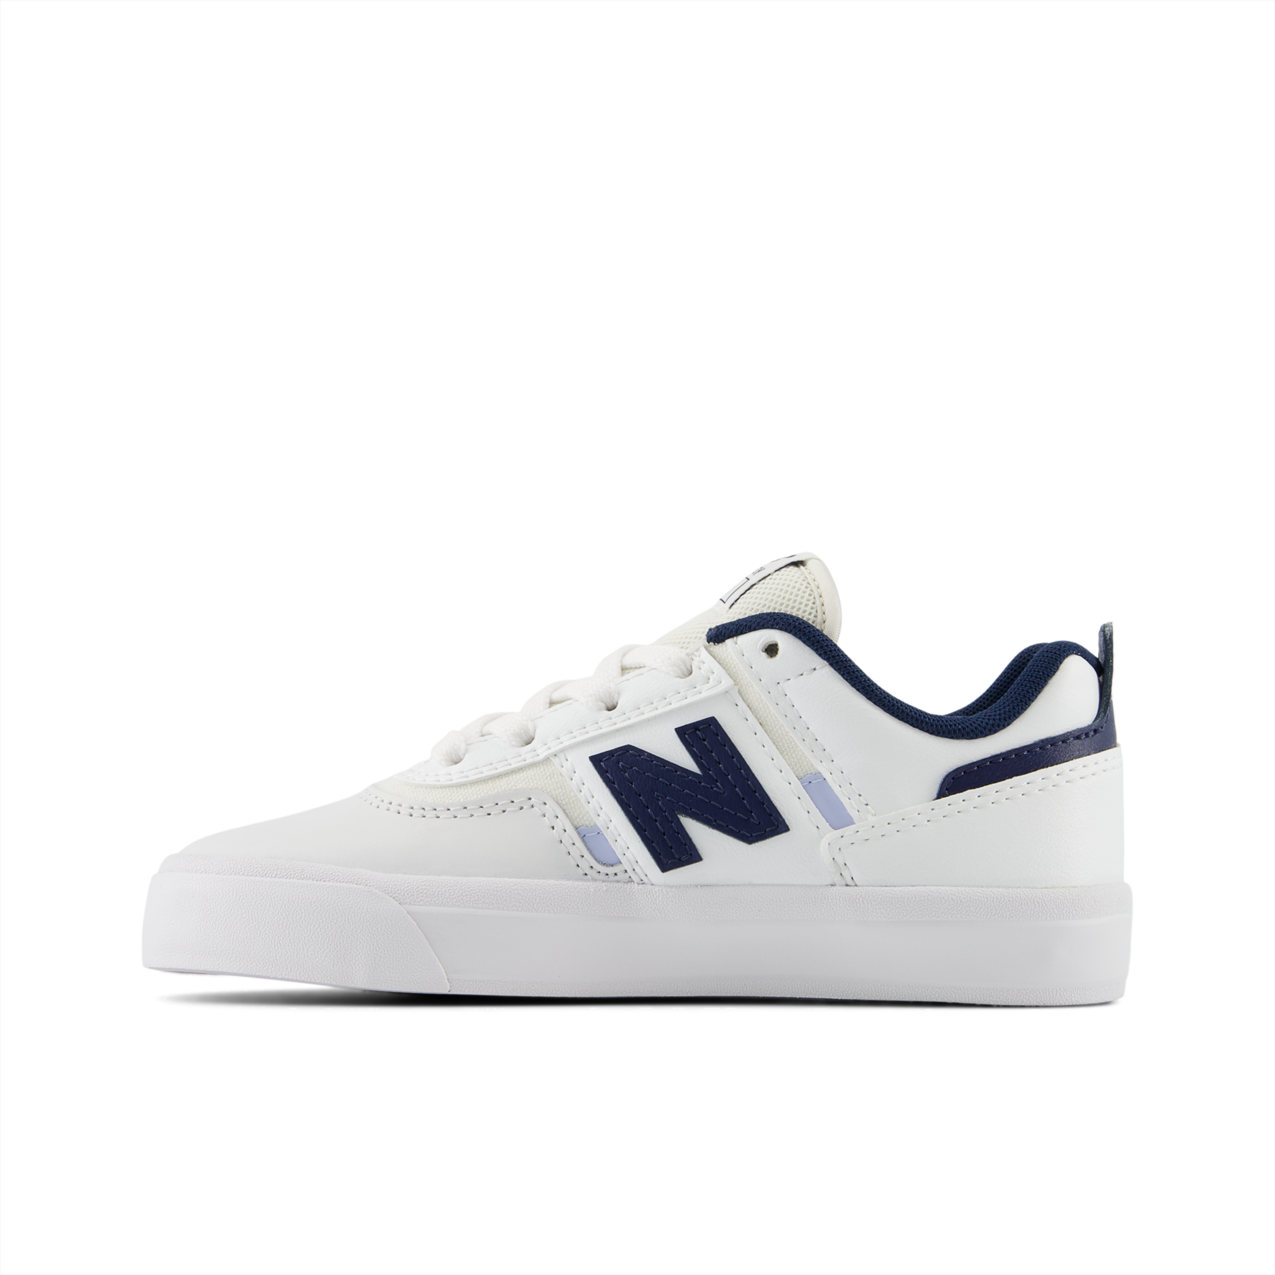 New Balance Numeric Kids Jamie Foy 306 White Nb Navy Shoes